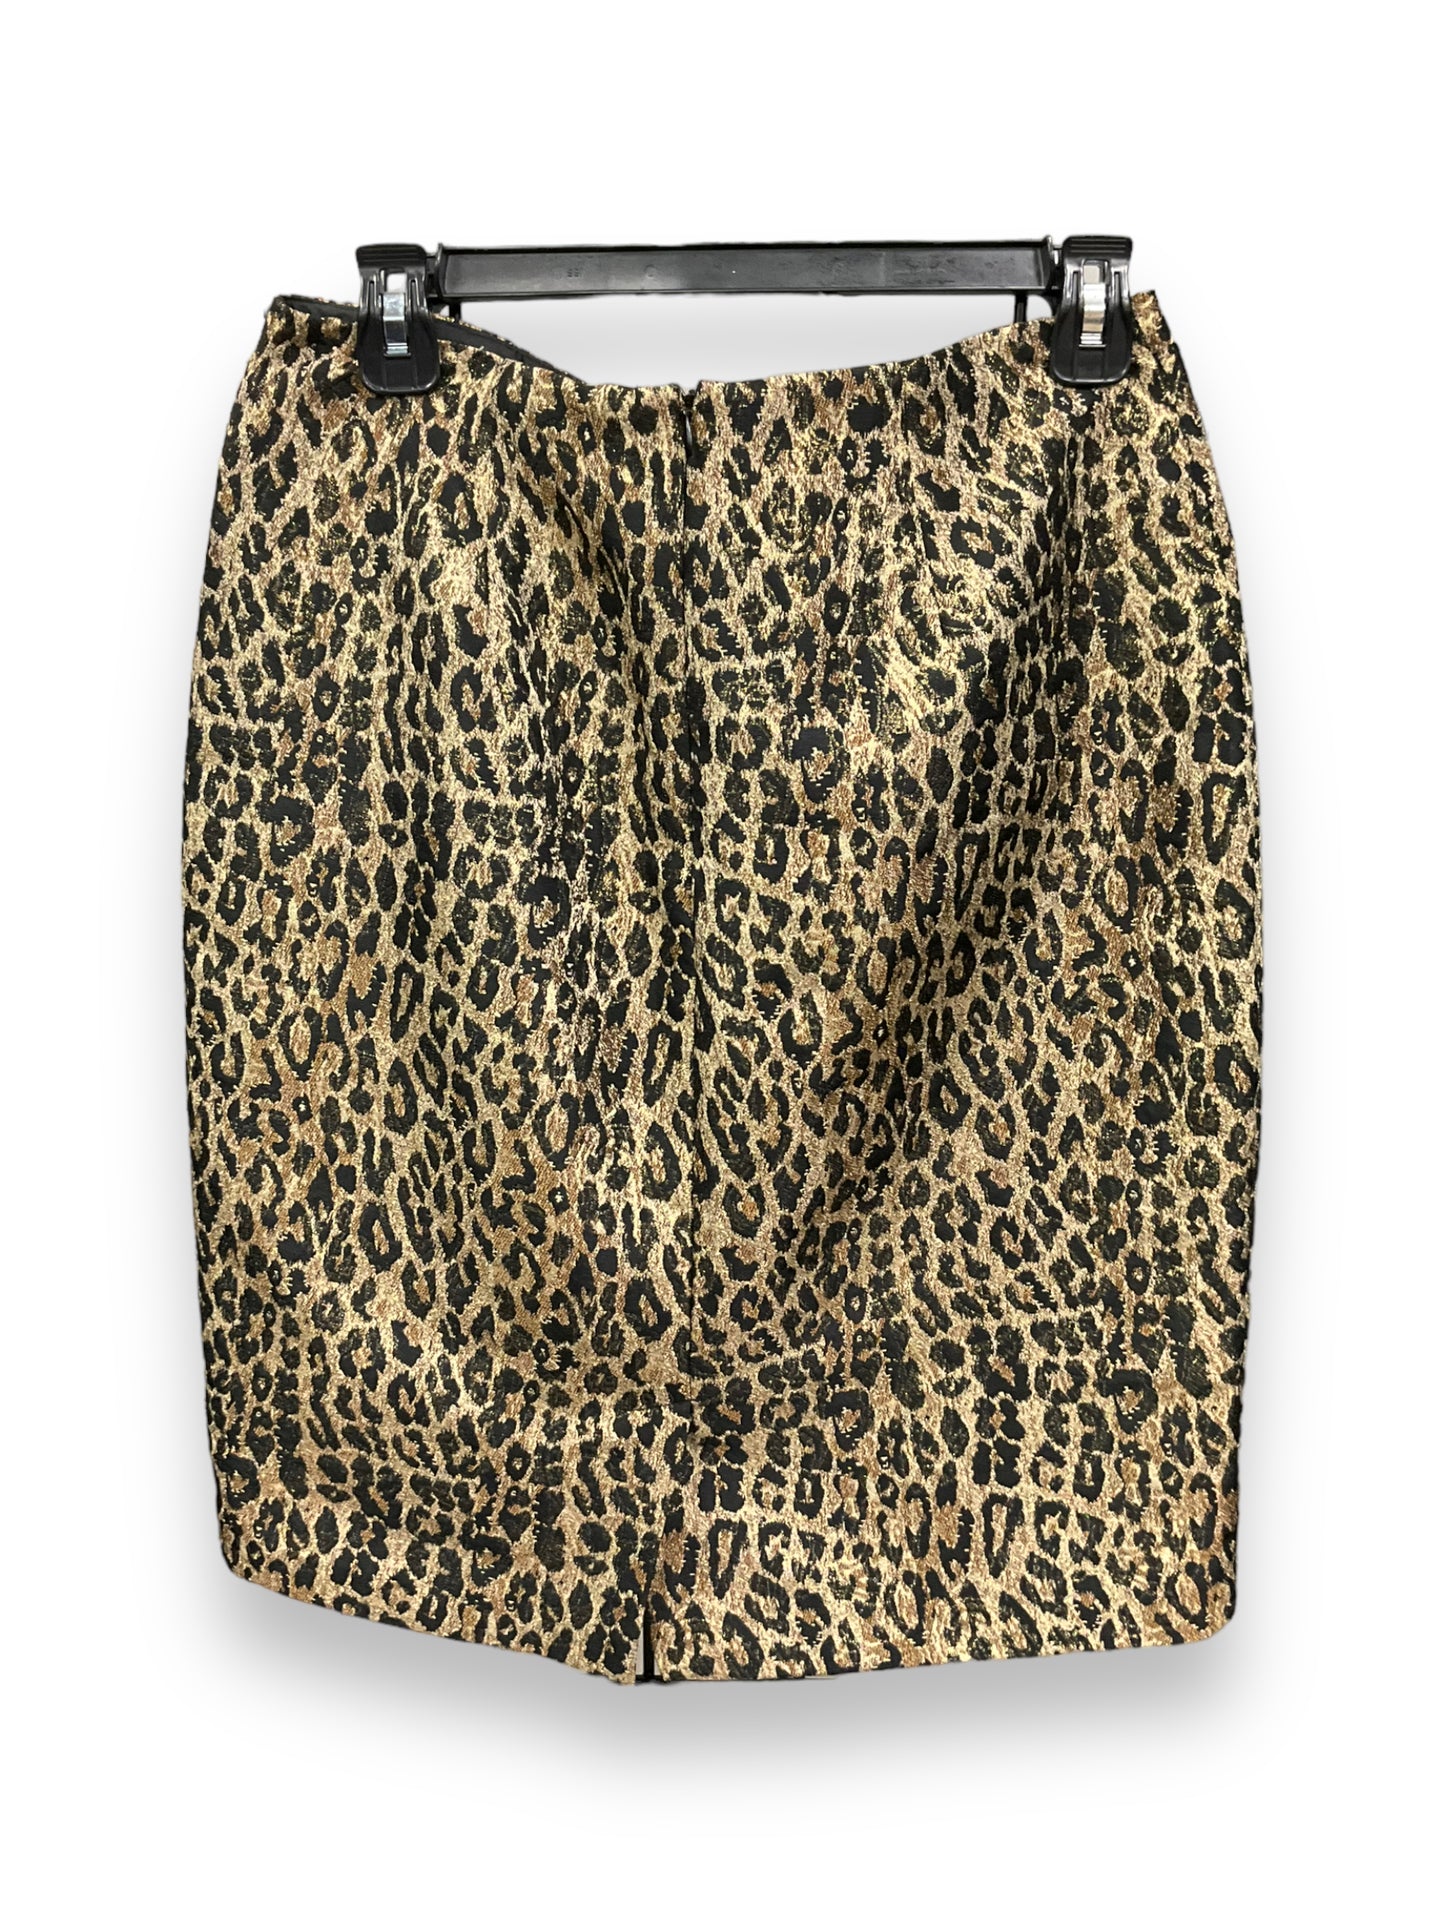 Skirt Midi By Sunny Leigh  Size: 8